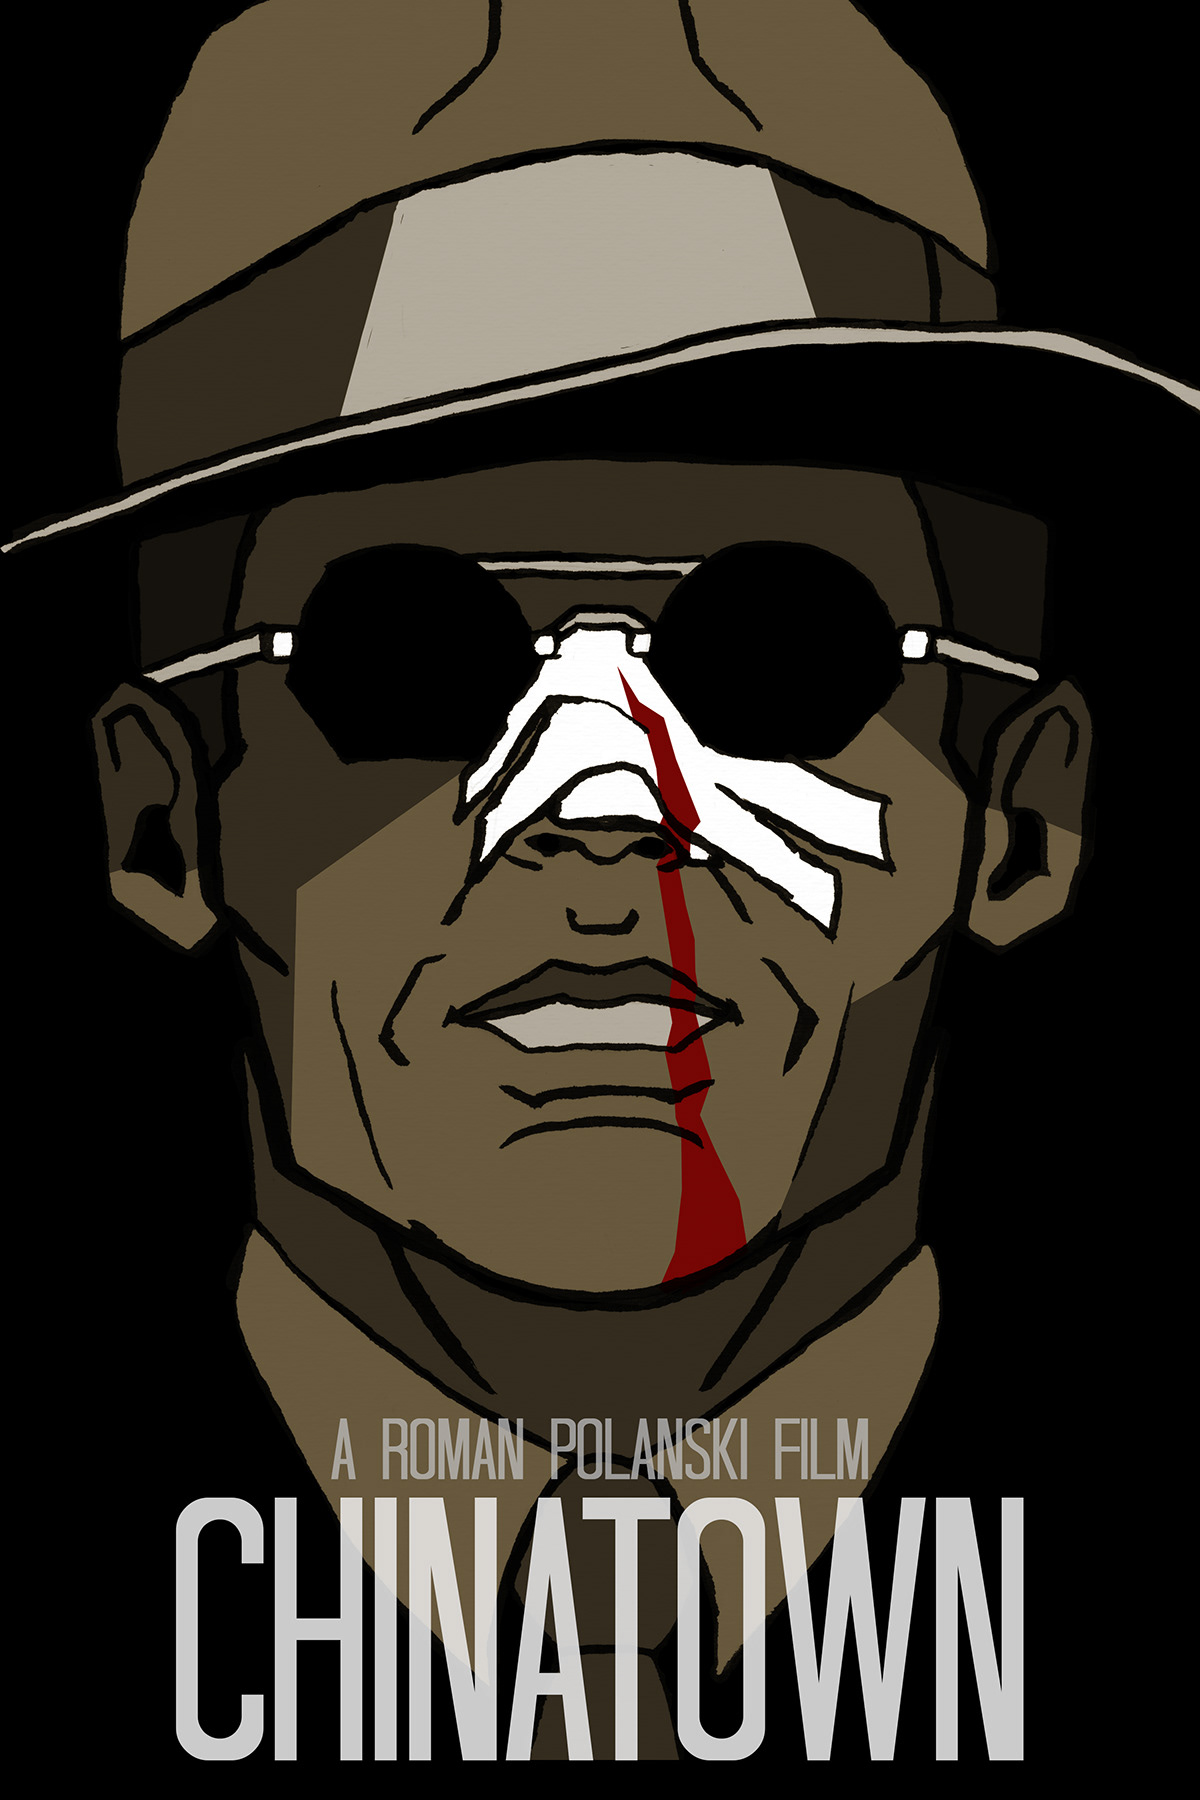 chinatown jack Nicholson roman polanski noir neo-noir movie poster minimalist blood